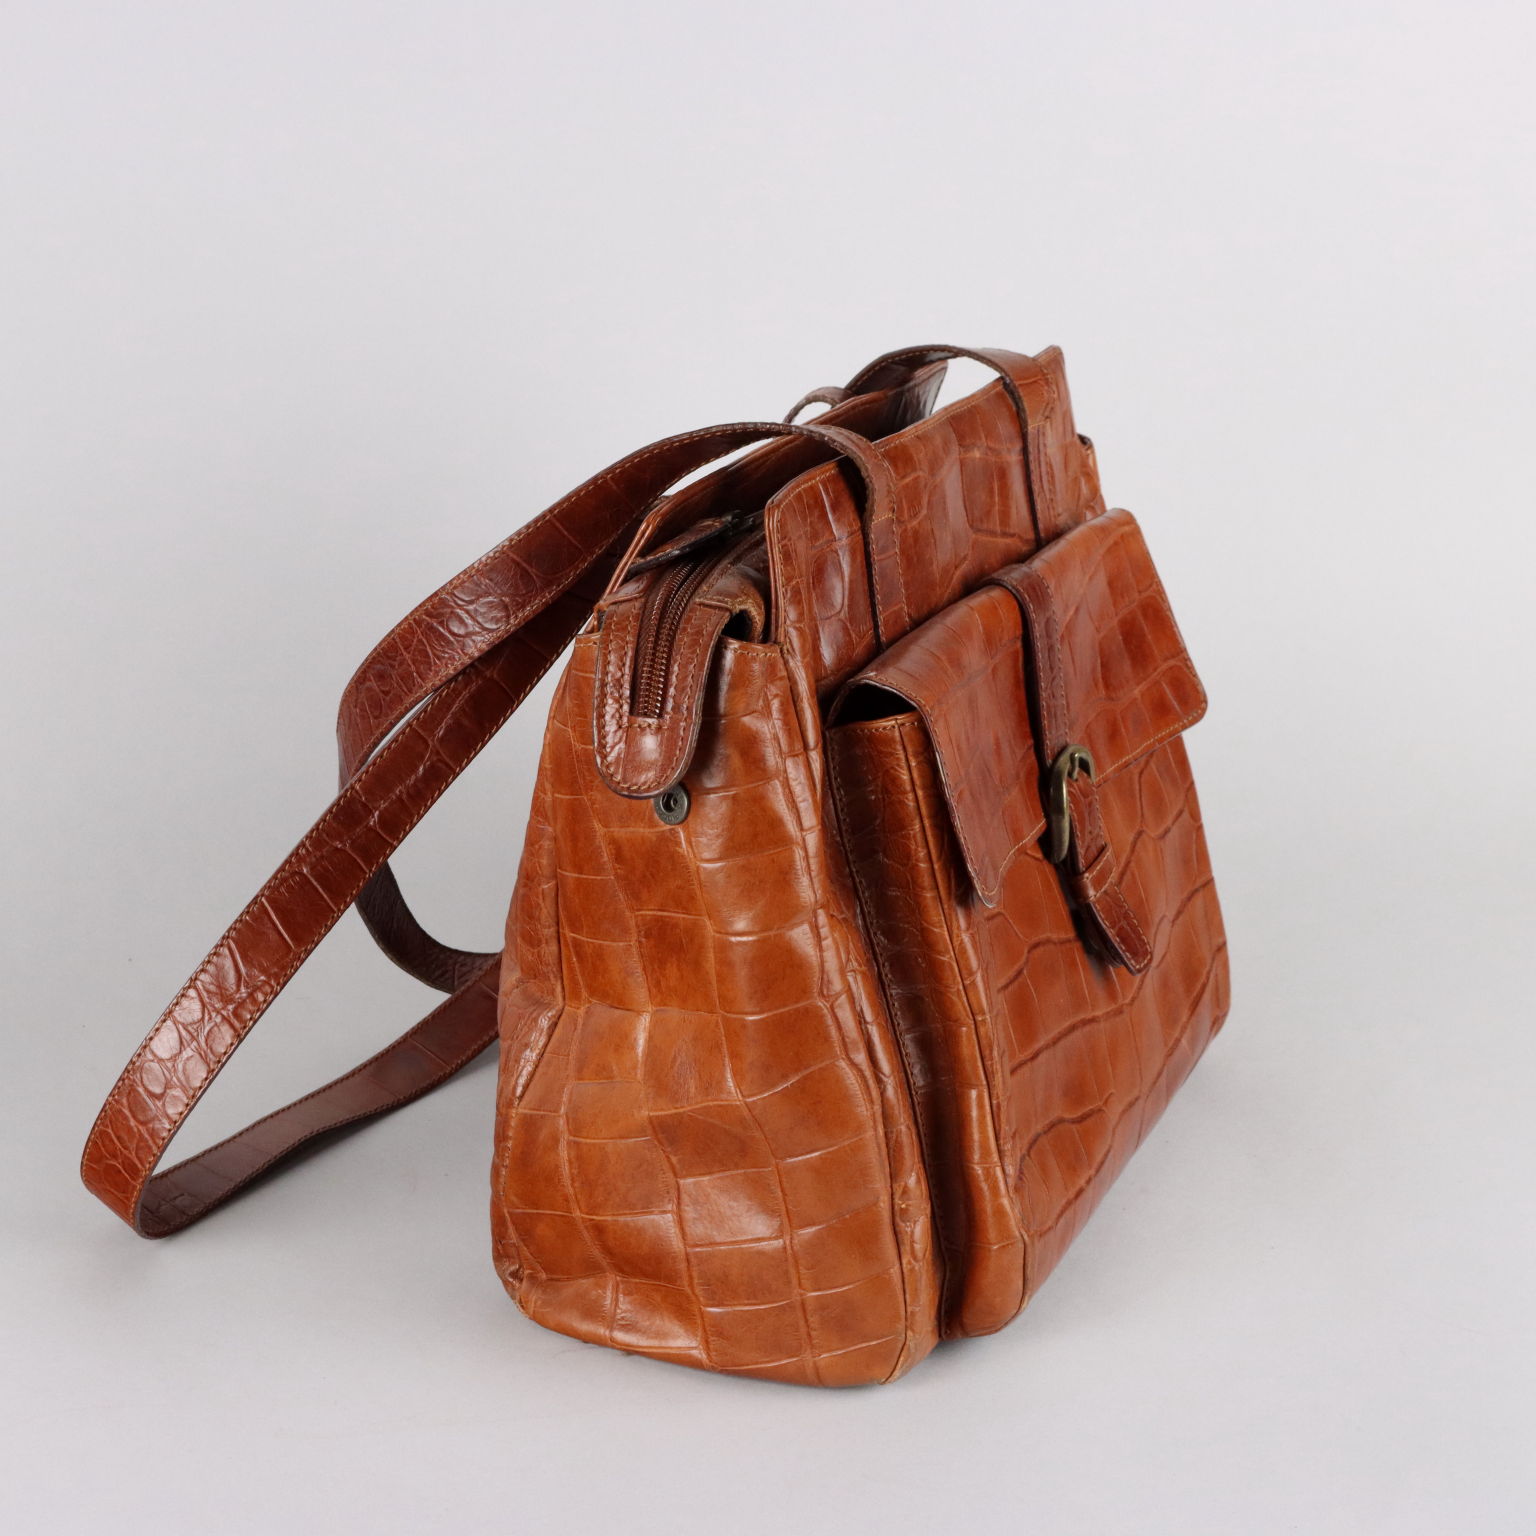 Small Pasticcino Bag in nappa leather, green | Weekend Max Mara